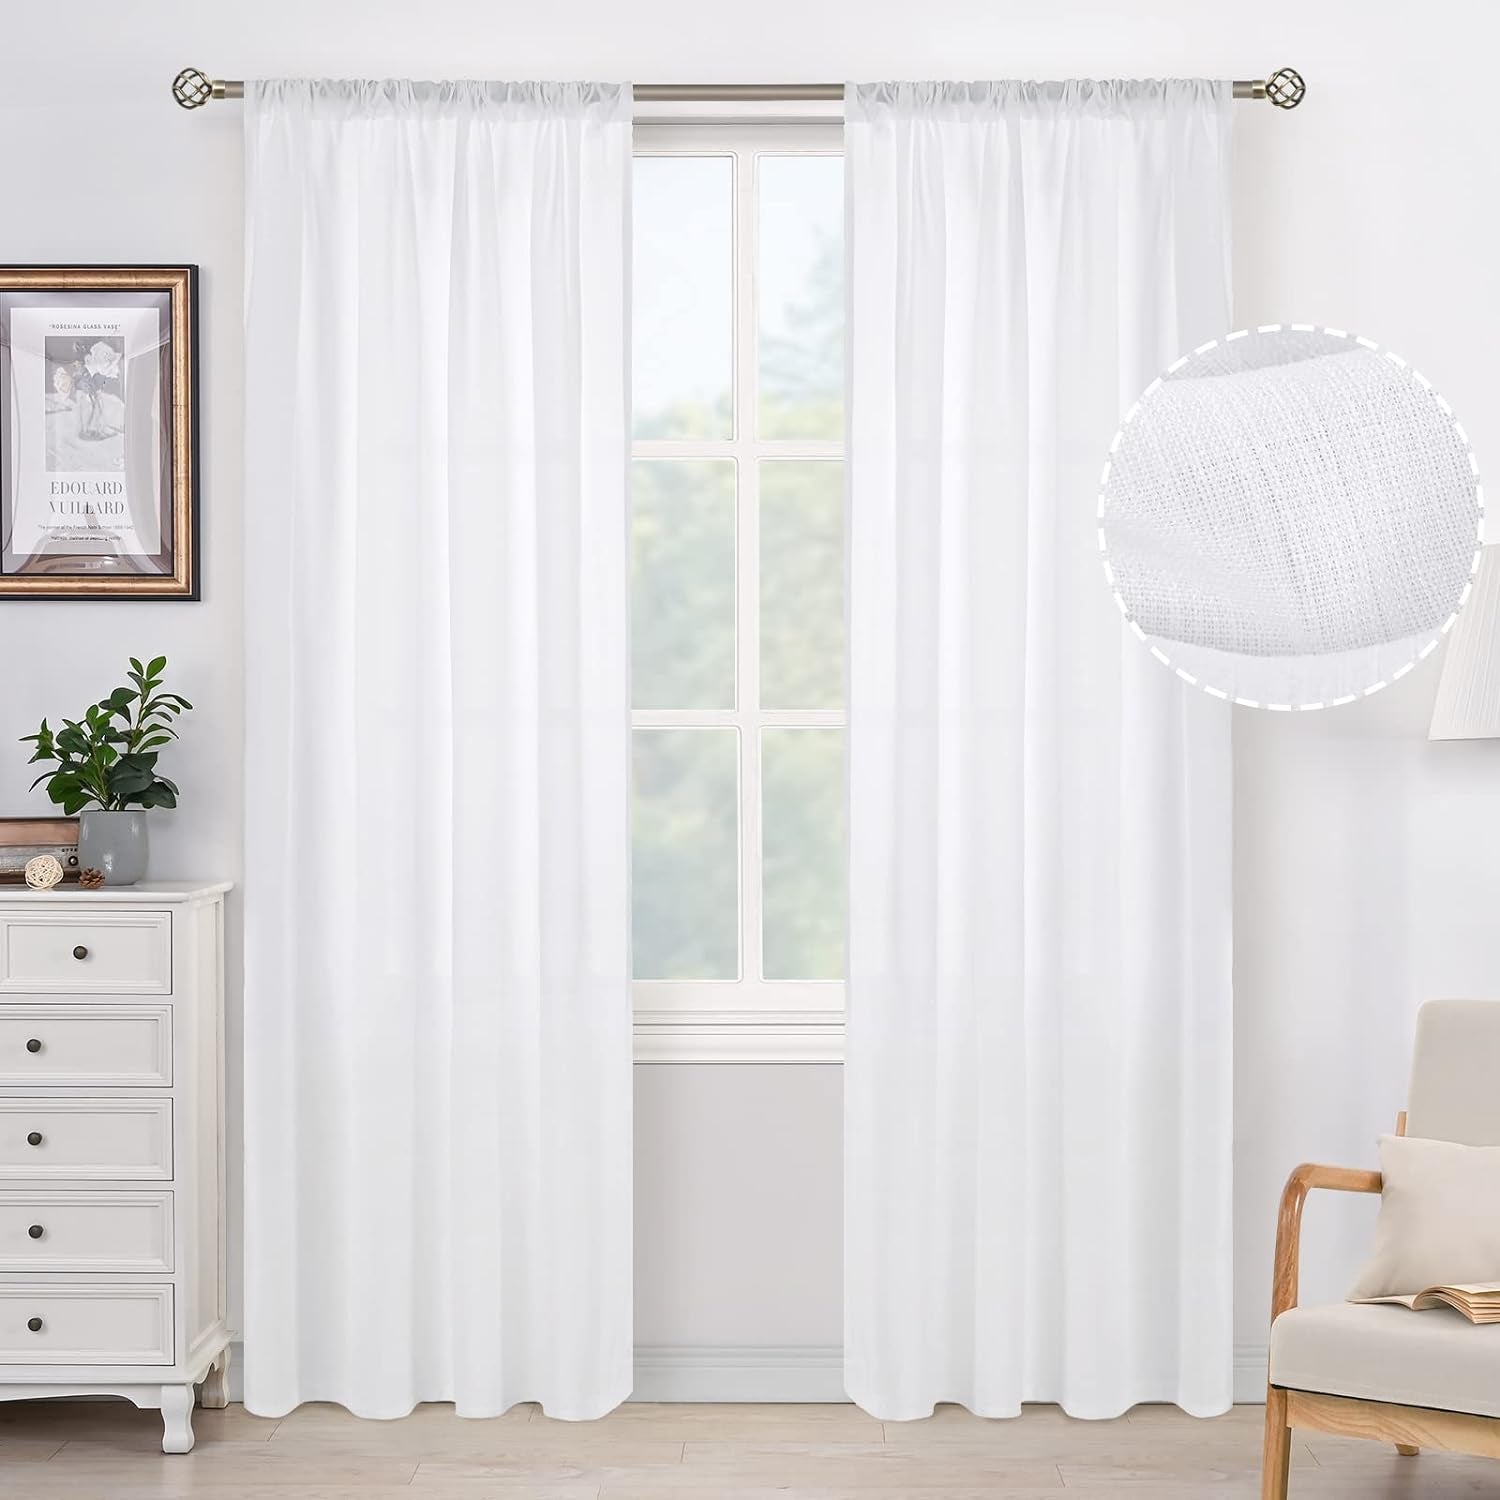 Bgment White Semi Sheer Curtains 95 Inch for Bedroom, Linen Look Rod Pocket Light Filtering Privacy Sheer Curtains for Living Room, Opaque White Sheer Curtains 2 Panels, Each 42 X 95 Inch  BGment White 42W X 84L 